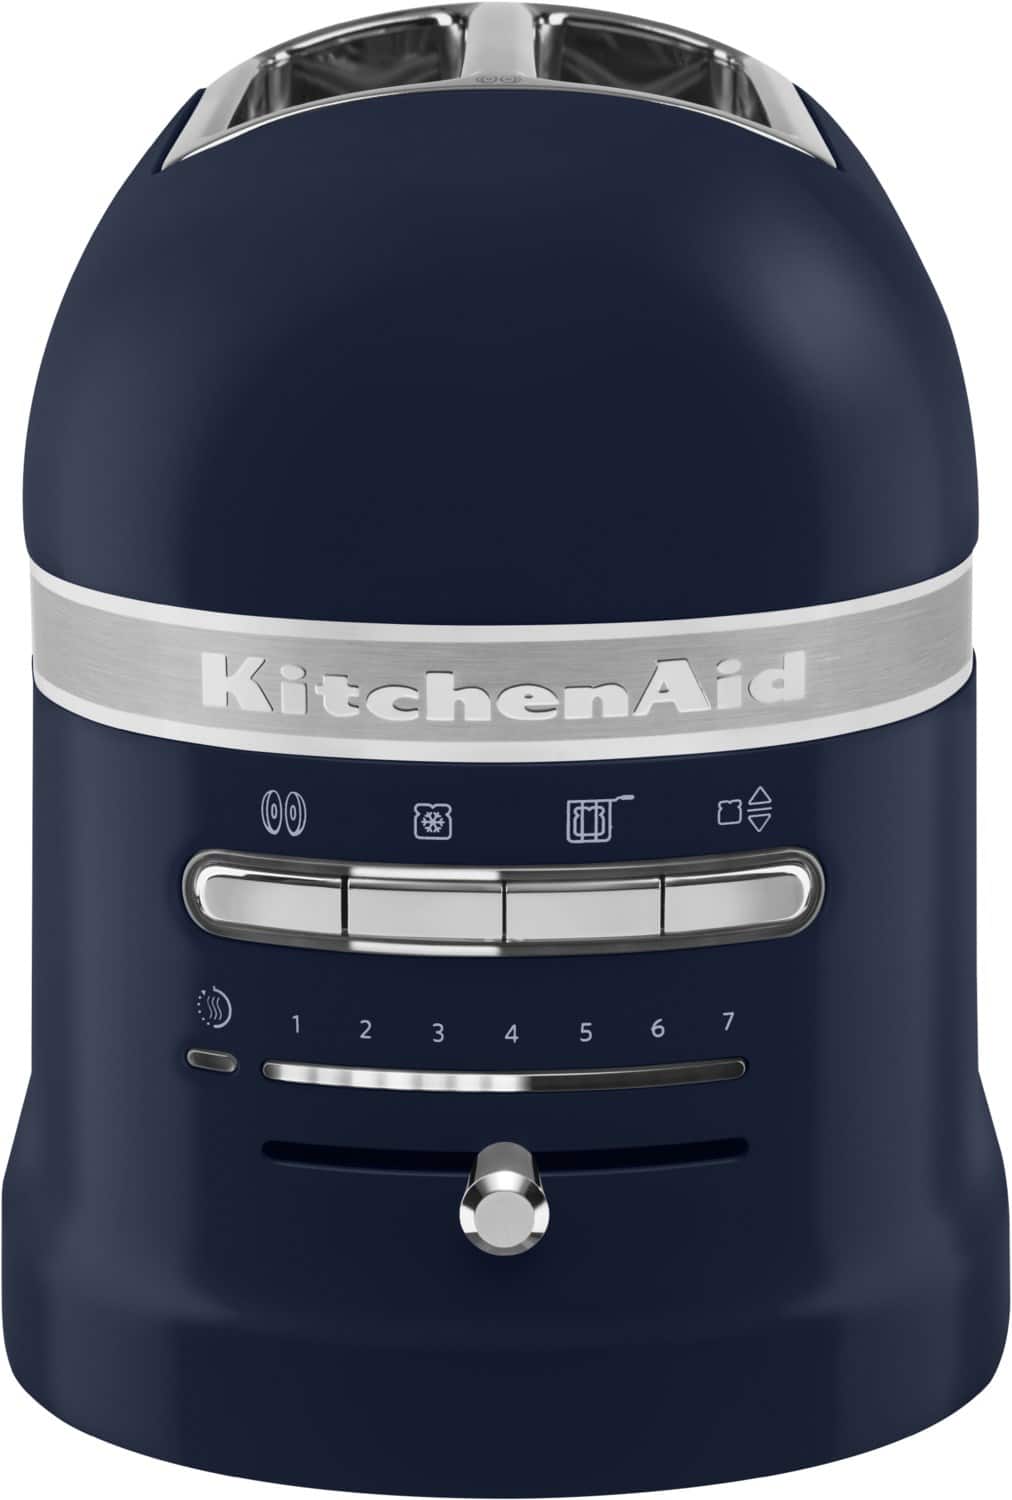 KitchenAid 5KMT2204EIB Ariston Kompakt-Toaster ink blue